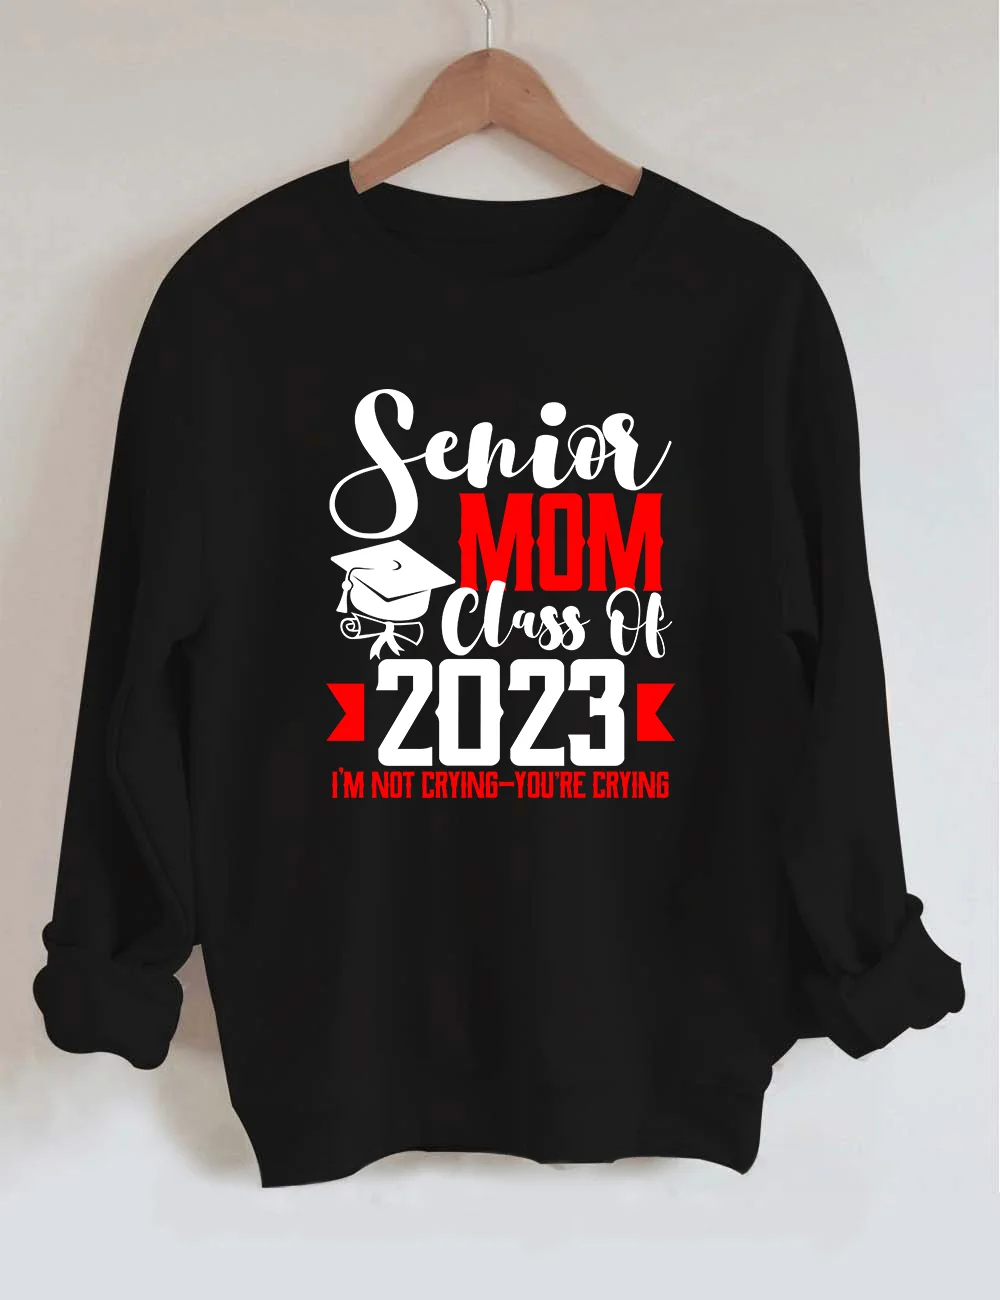 Senior Mom Class of 2023 Sweatshirt